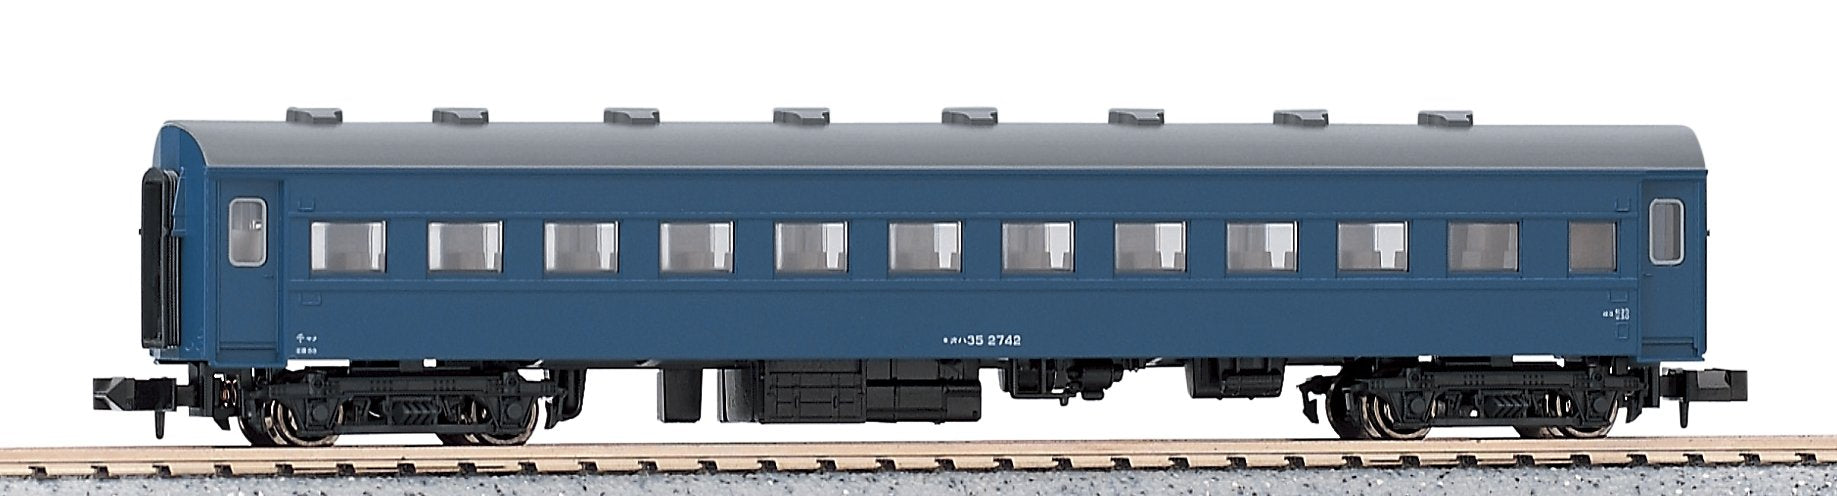 Kato N Gauge Blue Oha35 Postwar 5127-4 Railway Passenger Car Model